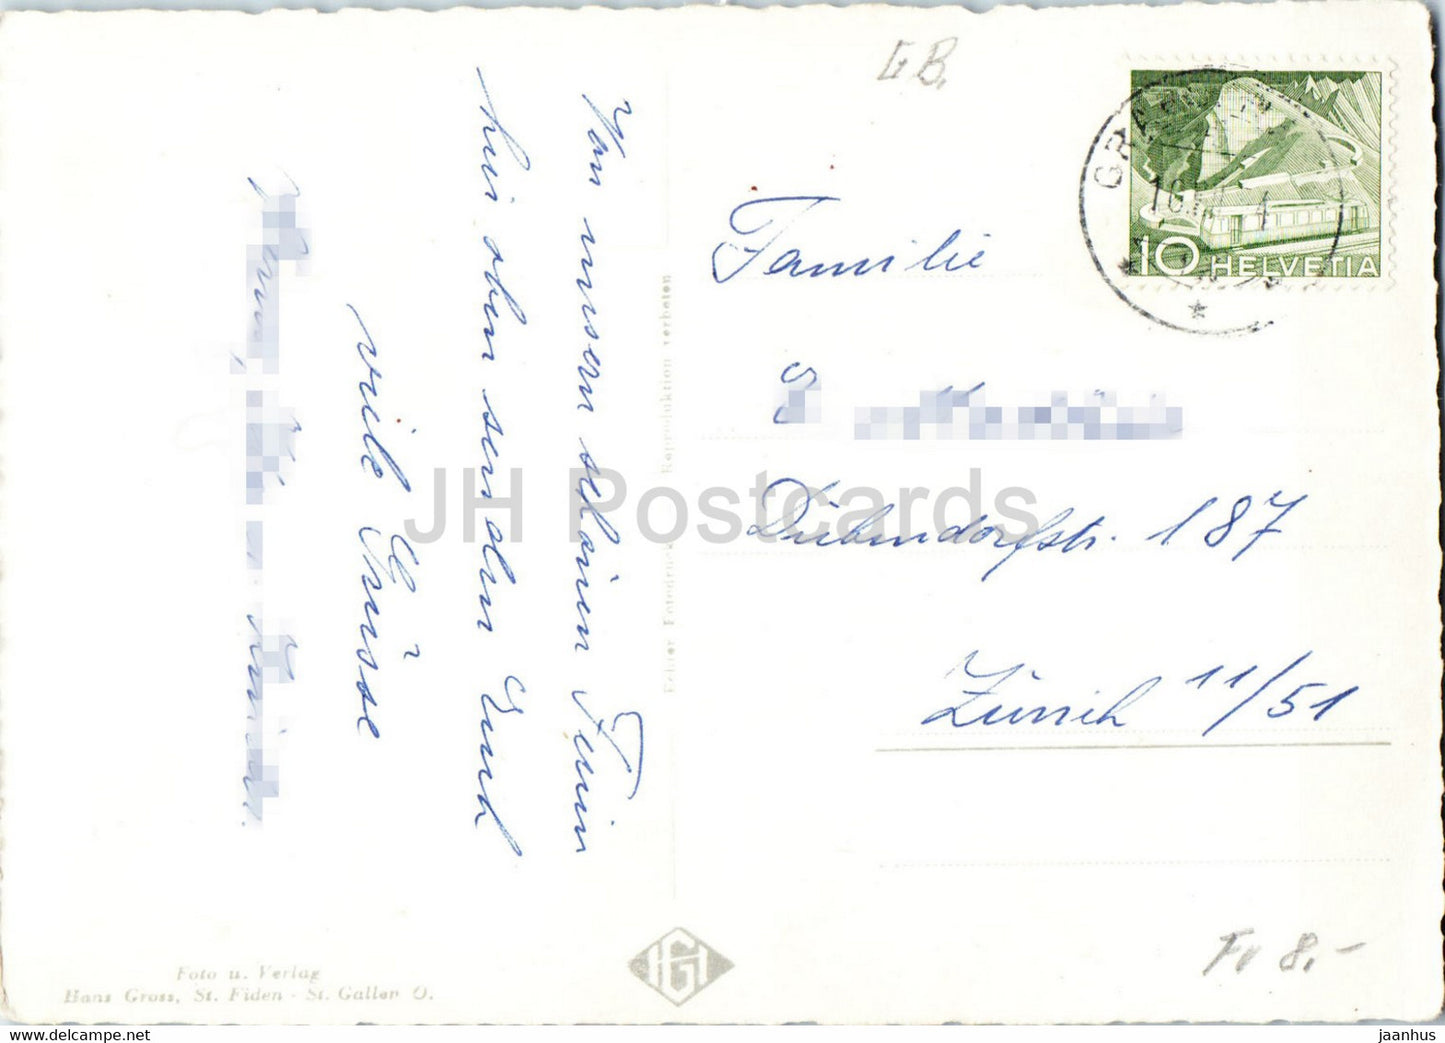 Motiv am Grabserberg - animaux - moutons - 999 - carte postale ancienne - Suisse - d'occasion